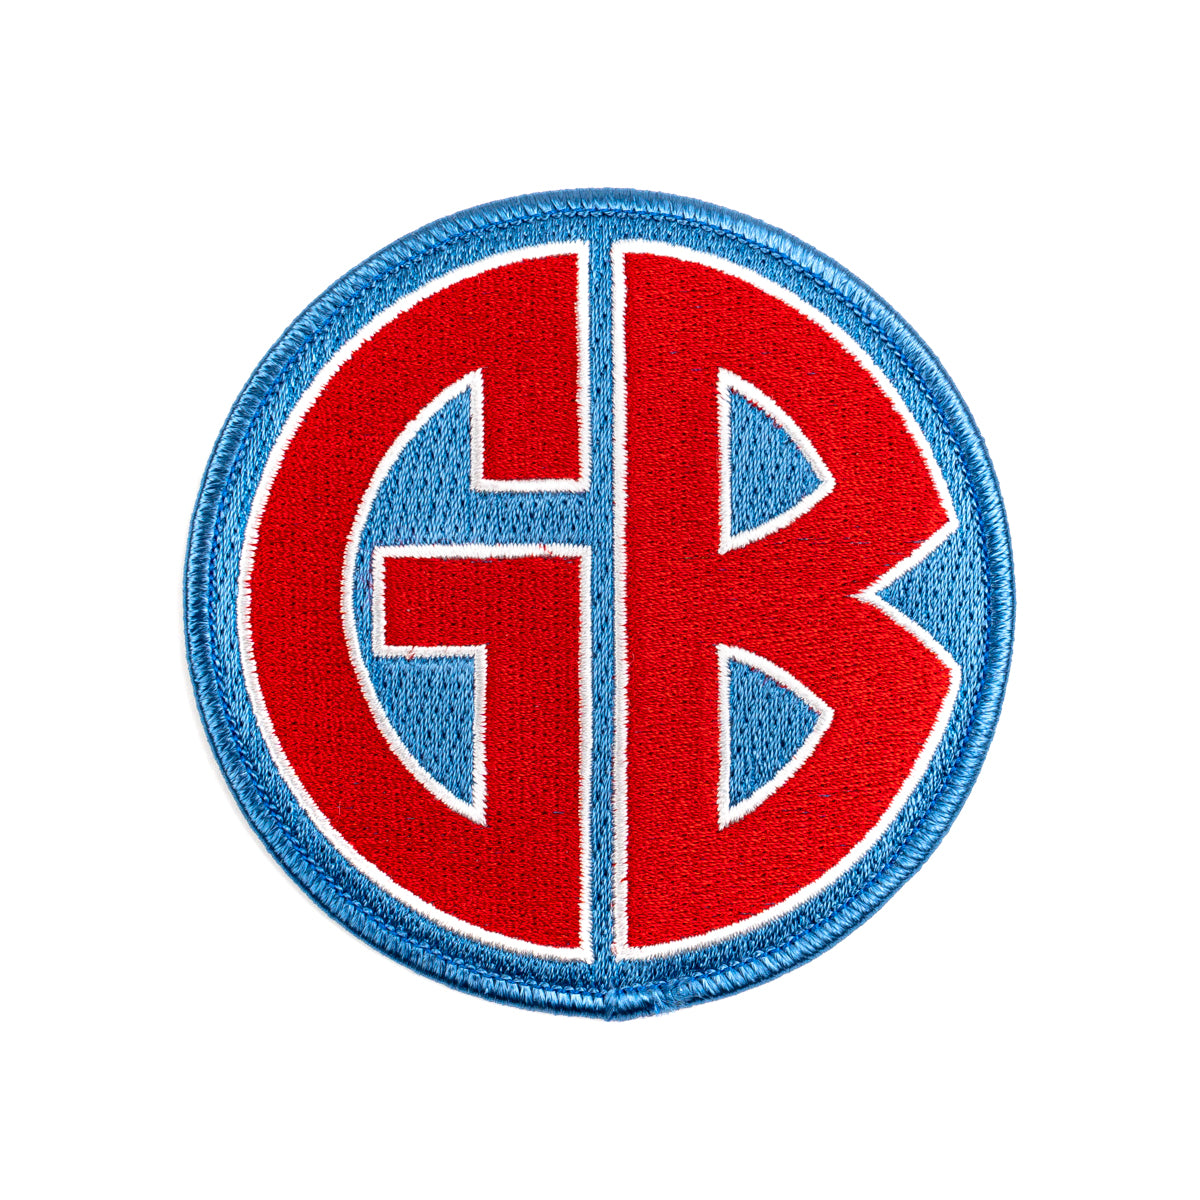 GORILLA BISCUITS "Logo" Patch